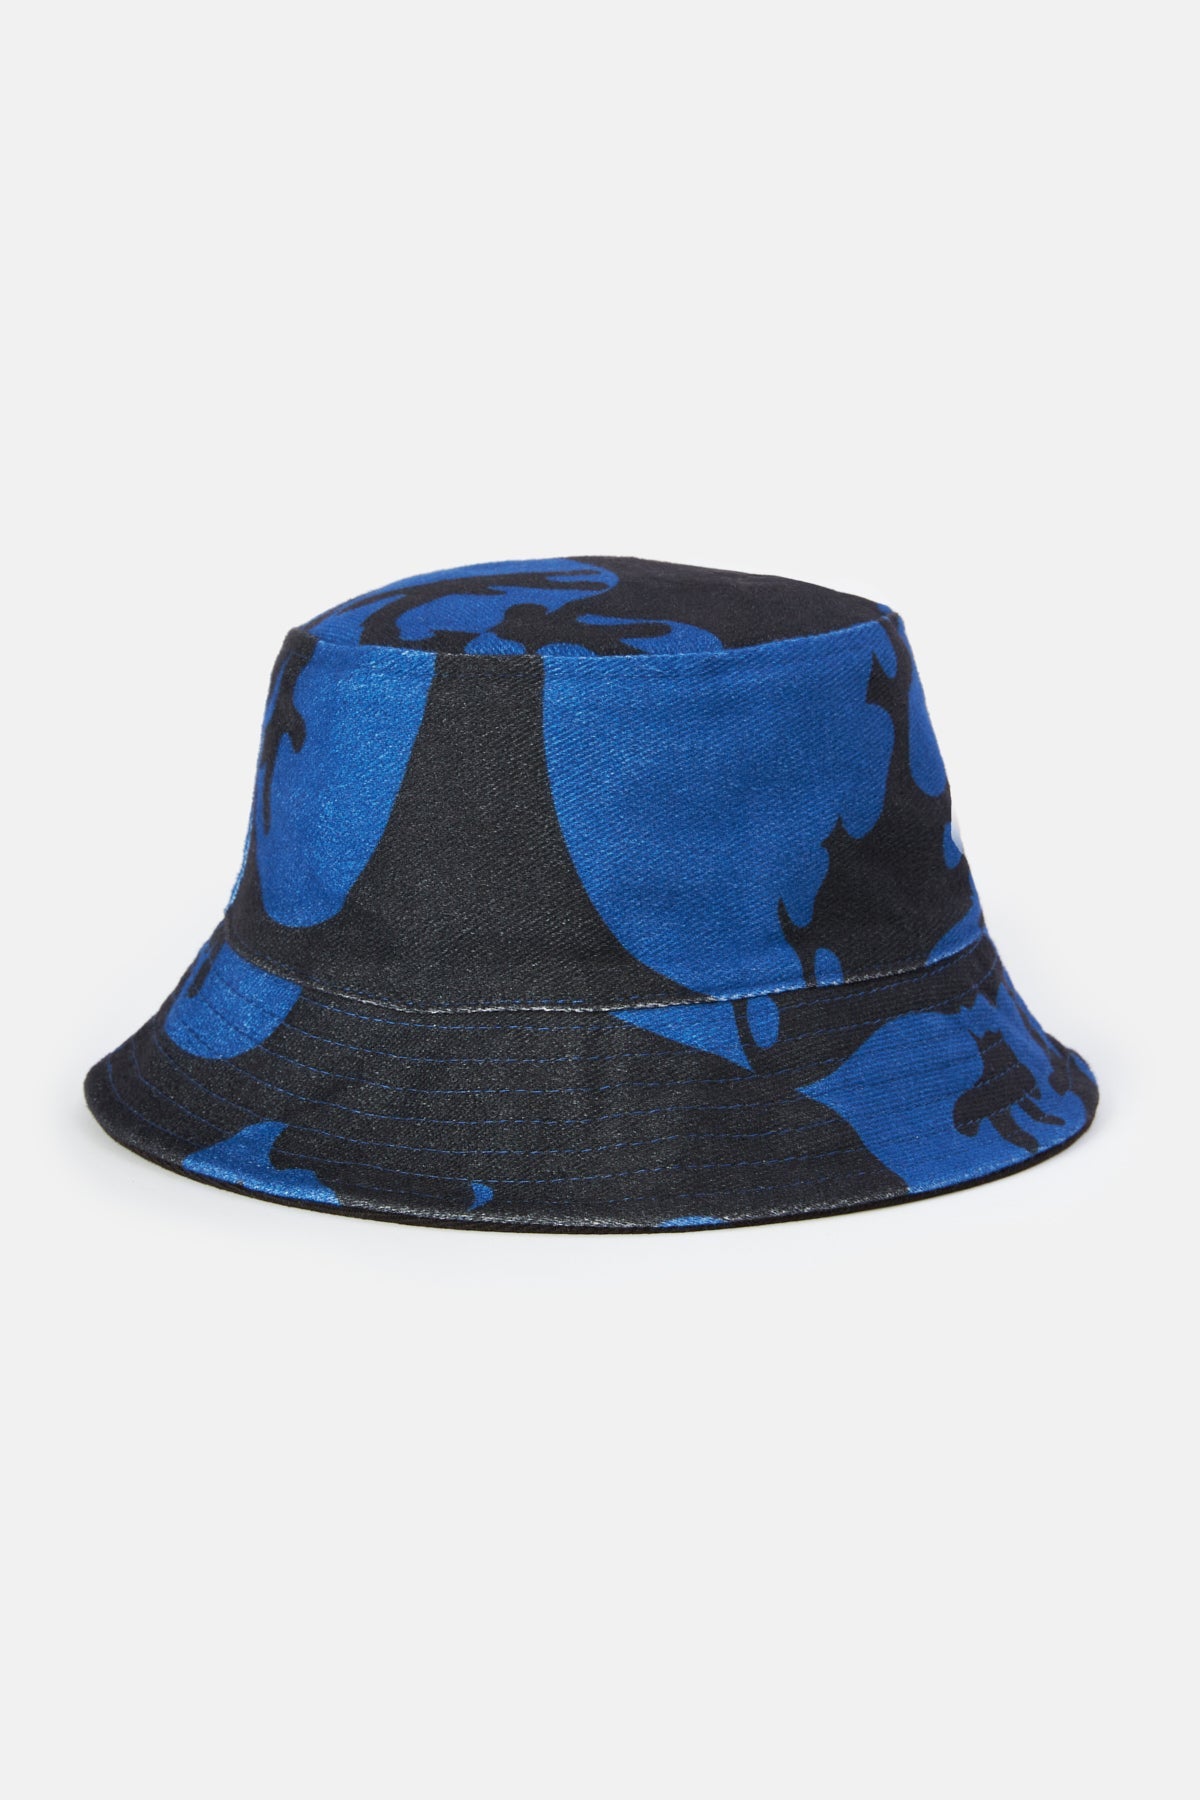 Reflect Studio // Bucket Hat // Camouflage // Schwarz-Blau